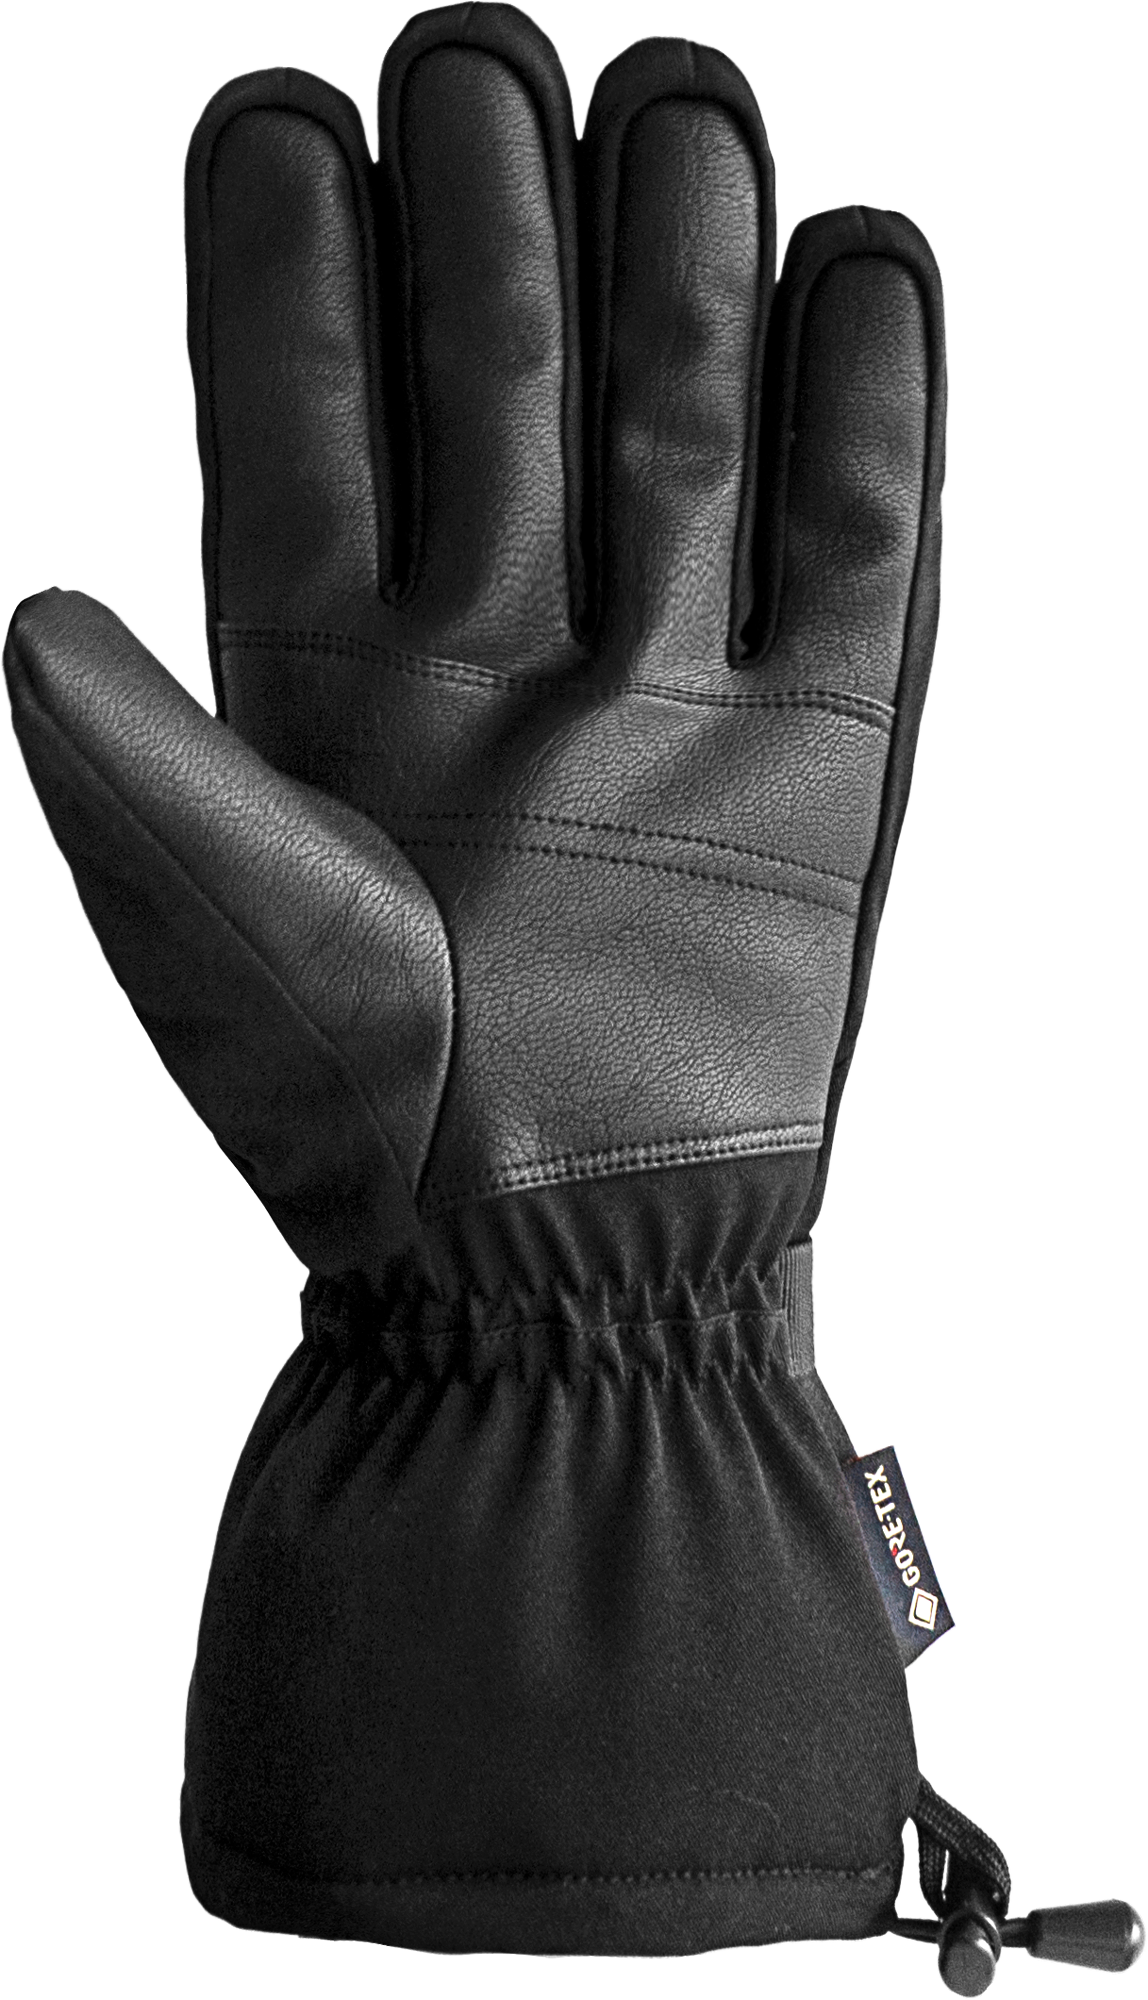 Reusch Warm Winter GORE-TEX Glove